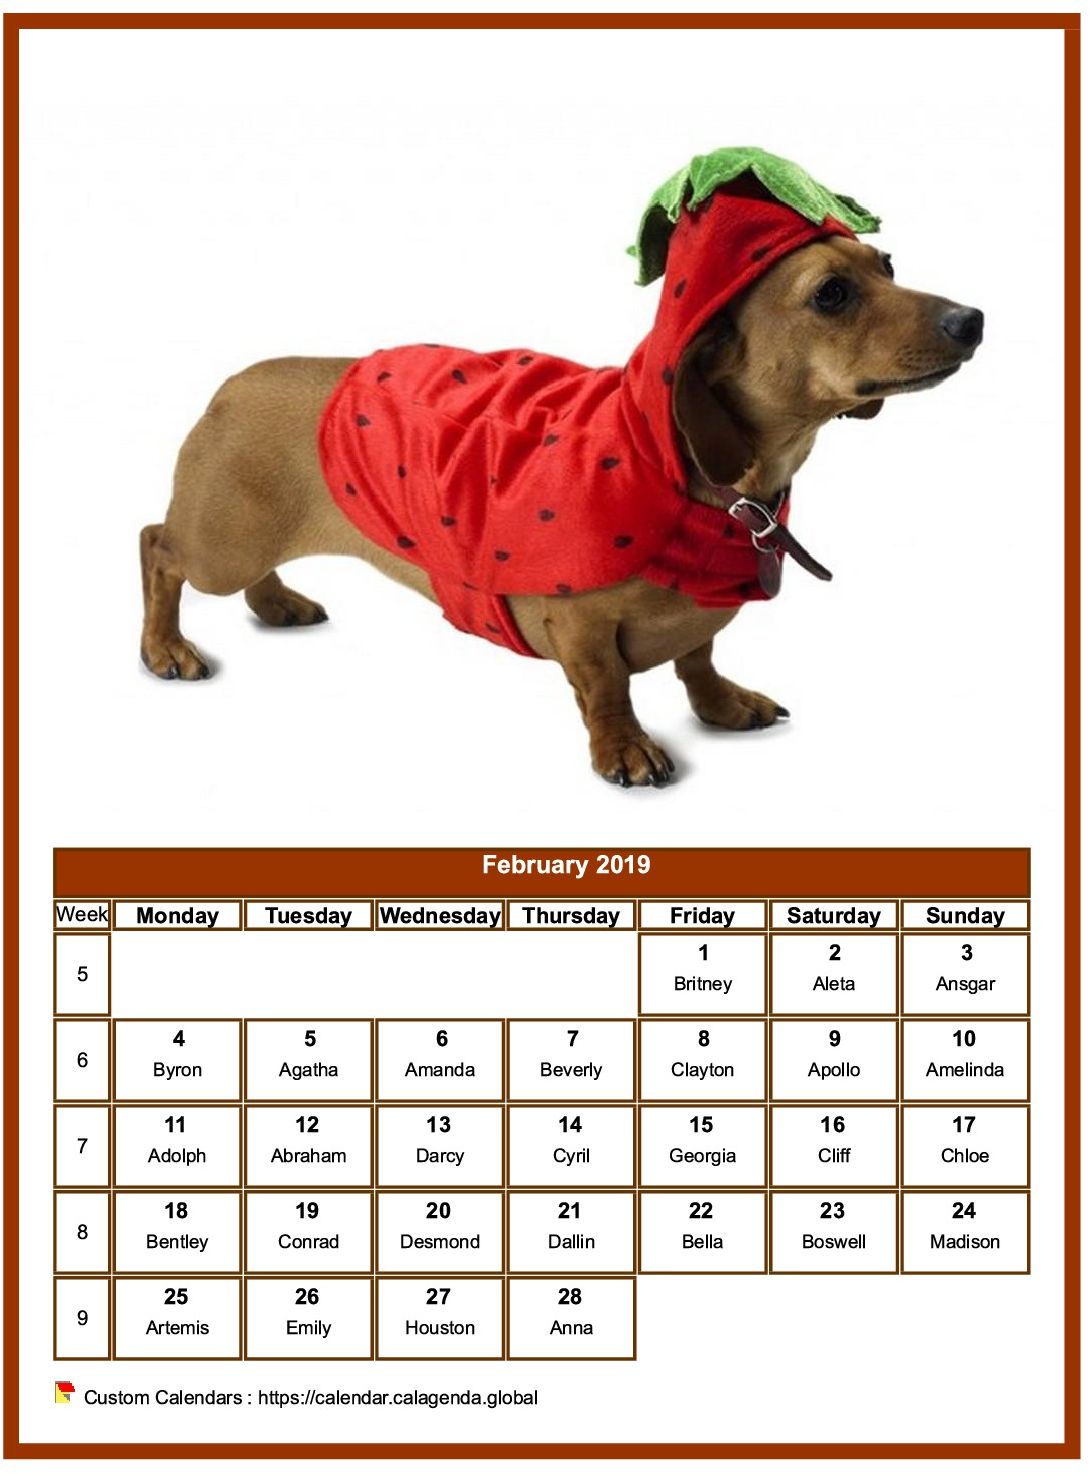 Calendar February 2019 dogs